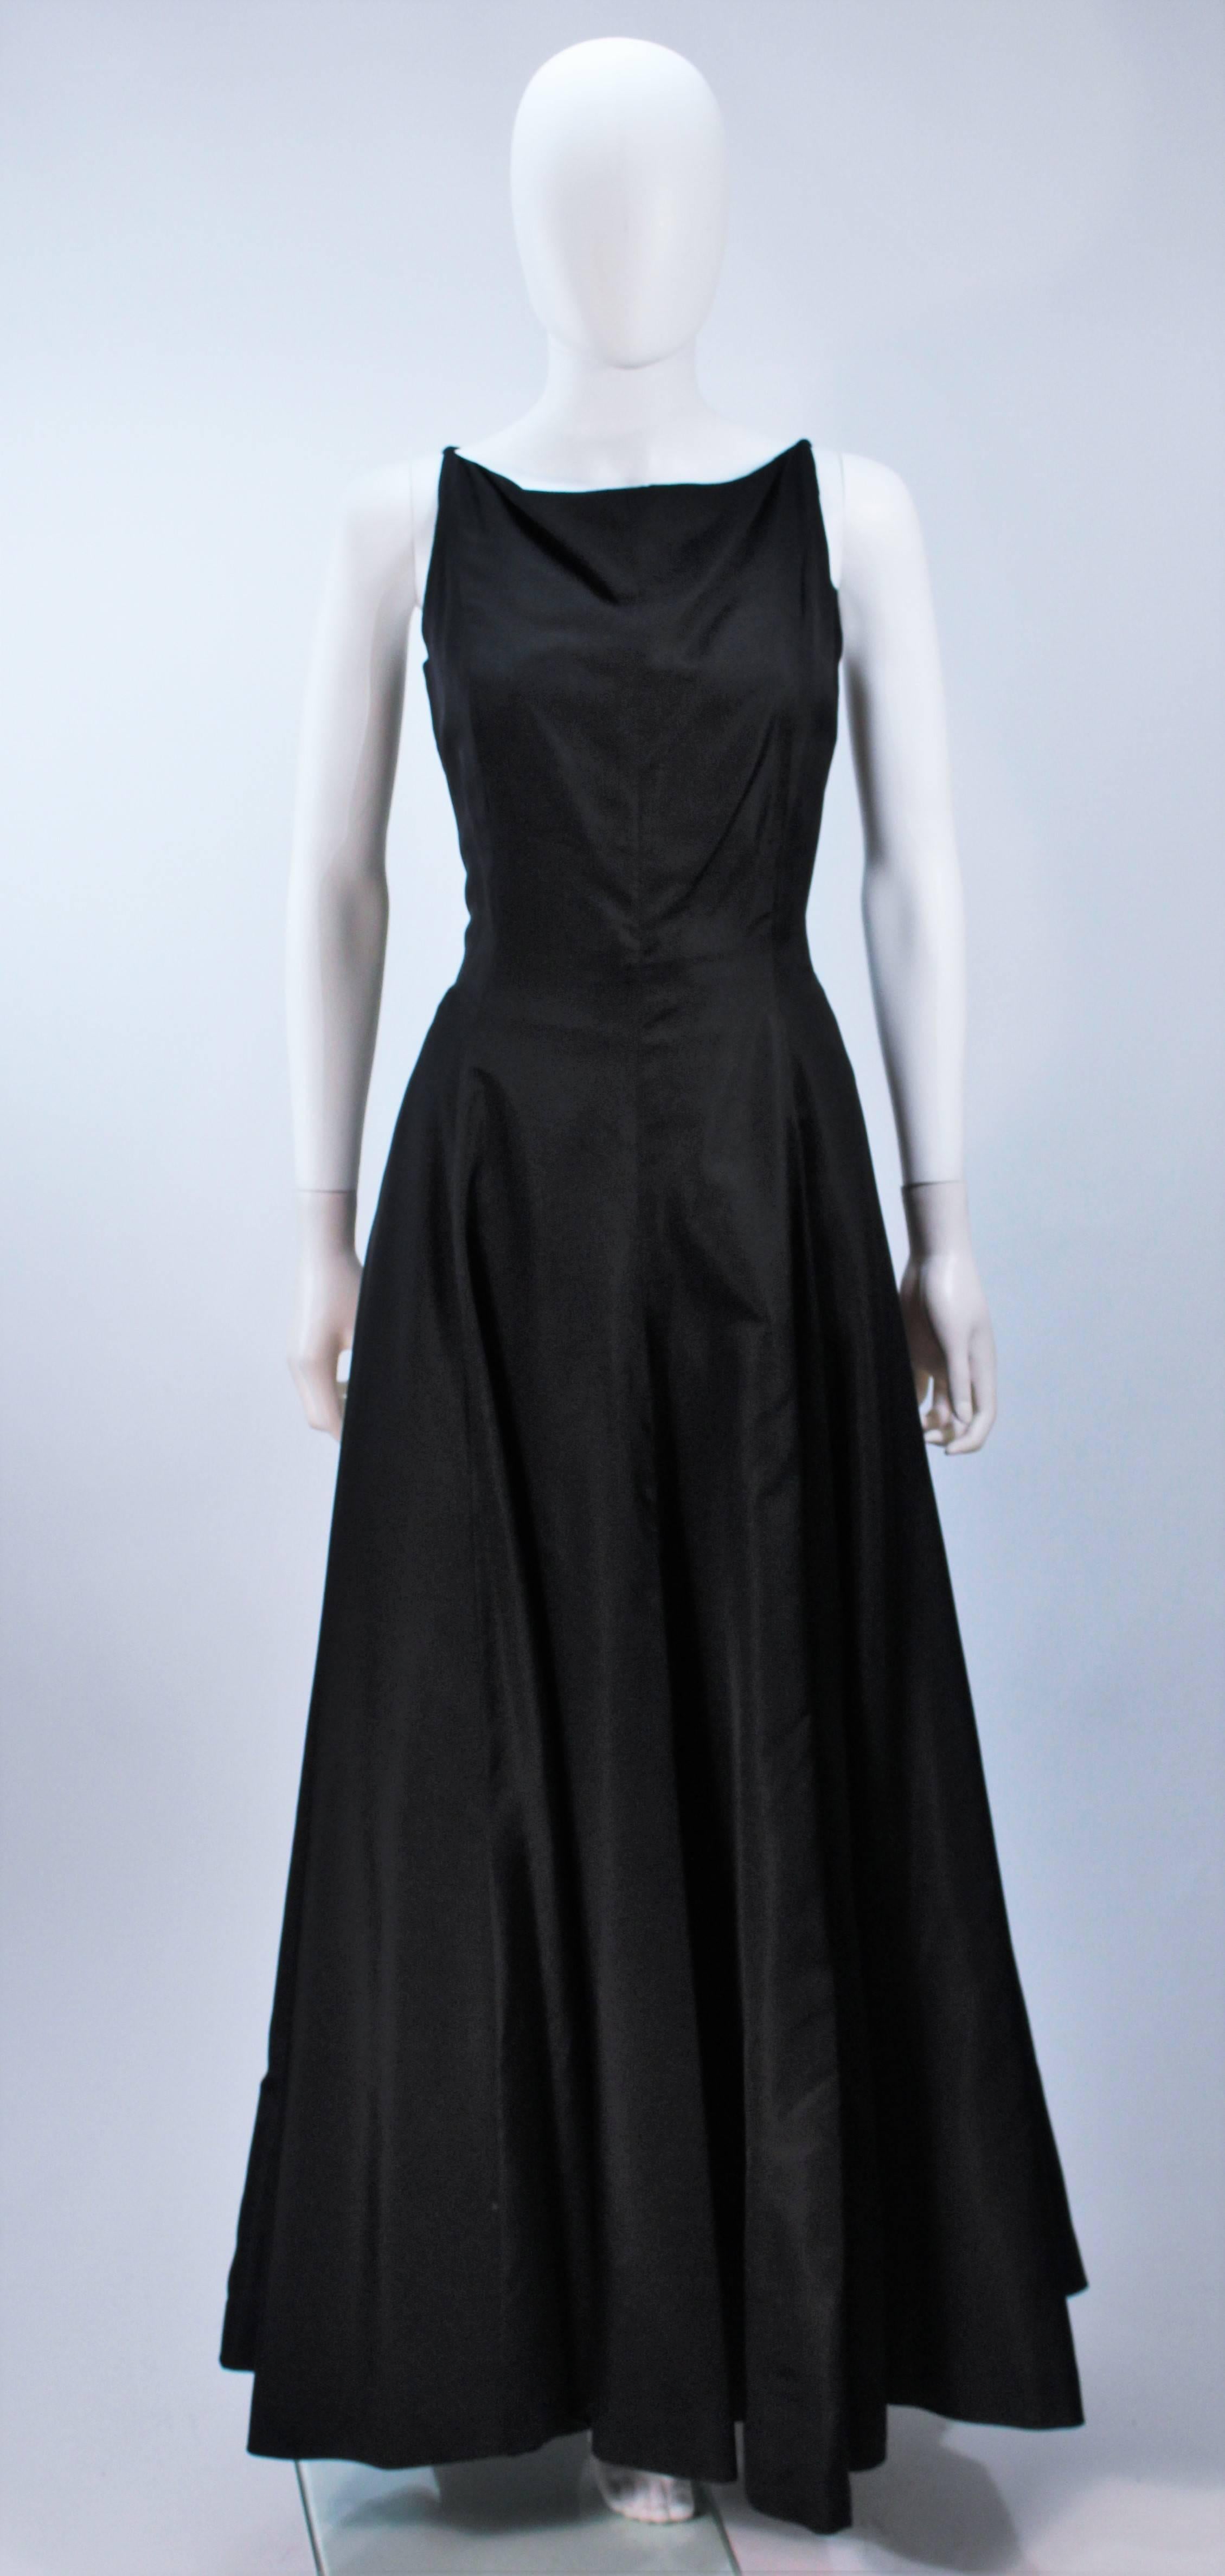 OSCAR DE LA RENTA Black Satin Gown and Embellished Jacket Ensemble Size 8 2